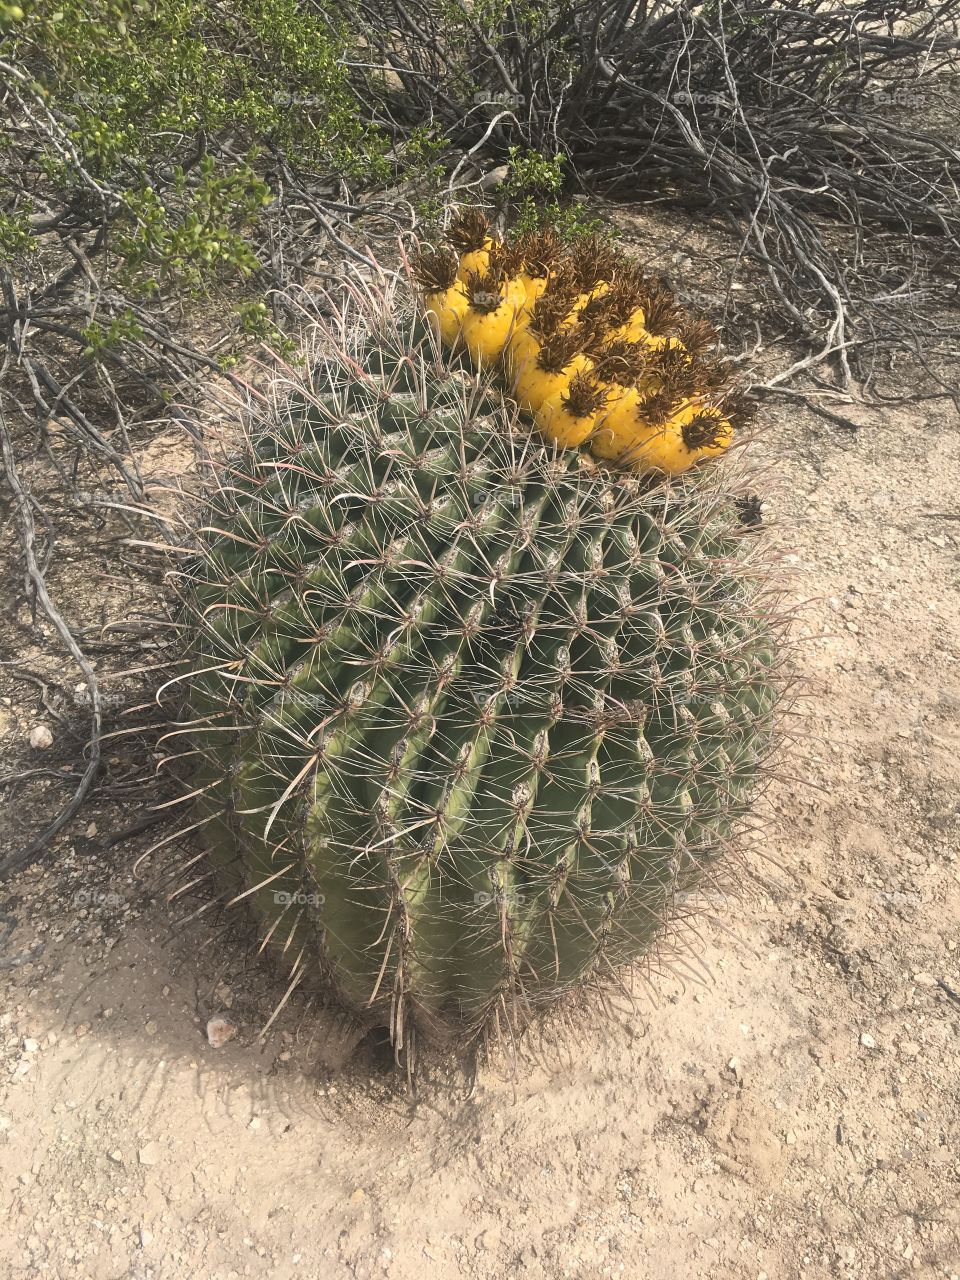 Cactus in bloom in Tucson, Arizona's Sabino Canyon.